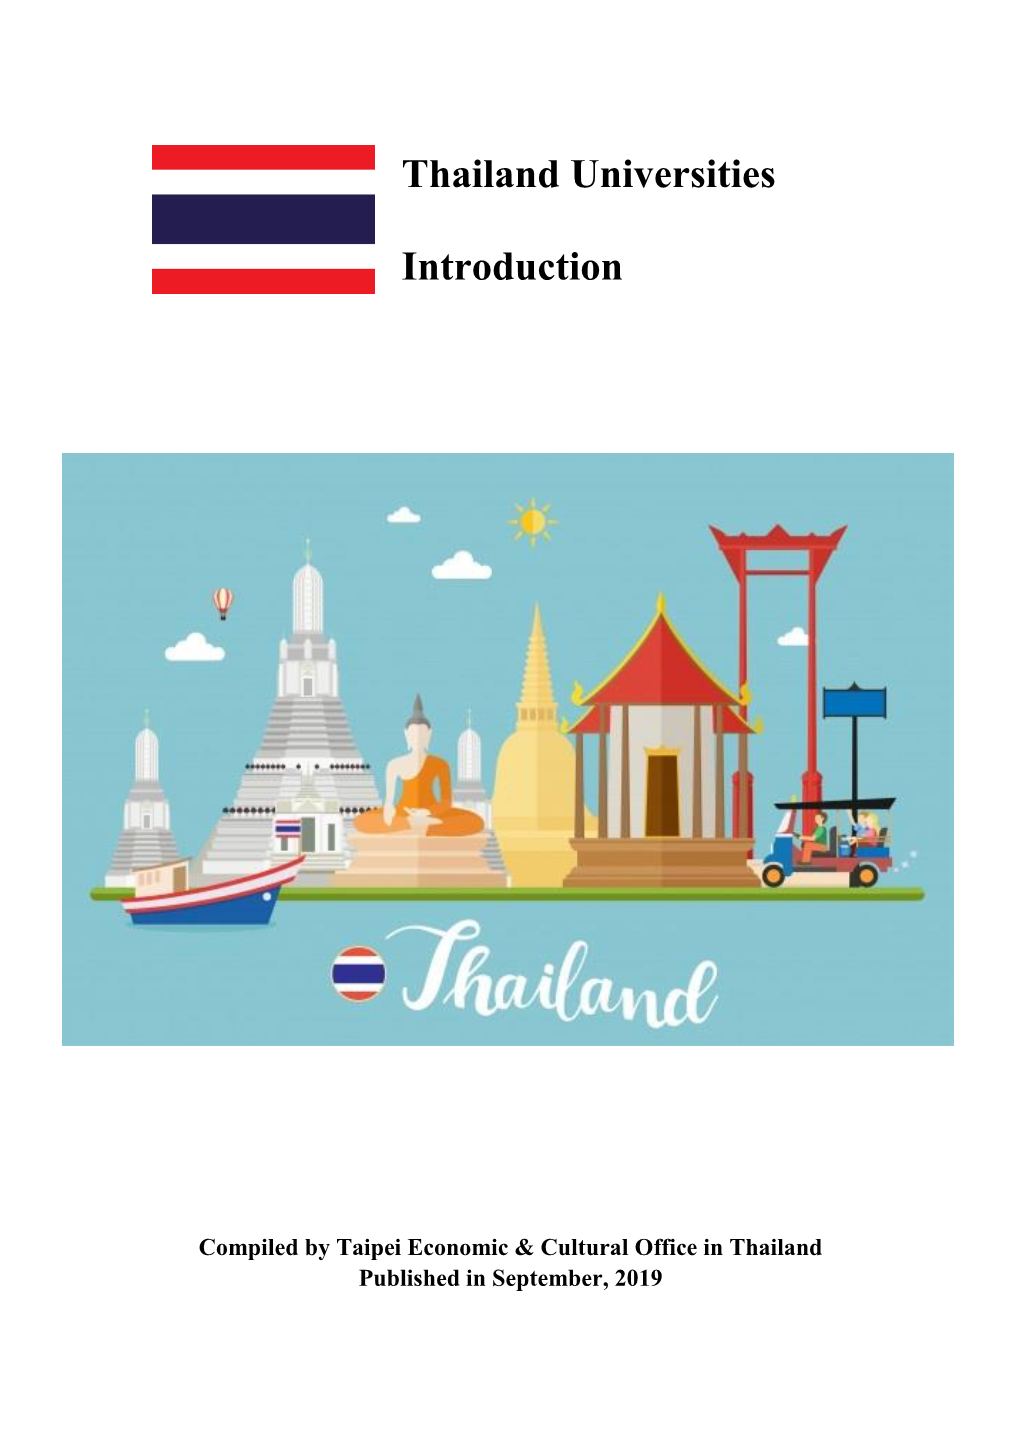 Thailand Universities Introduction